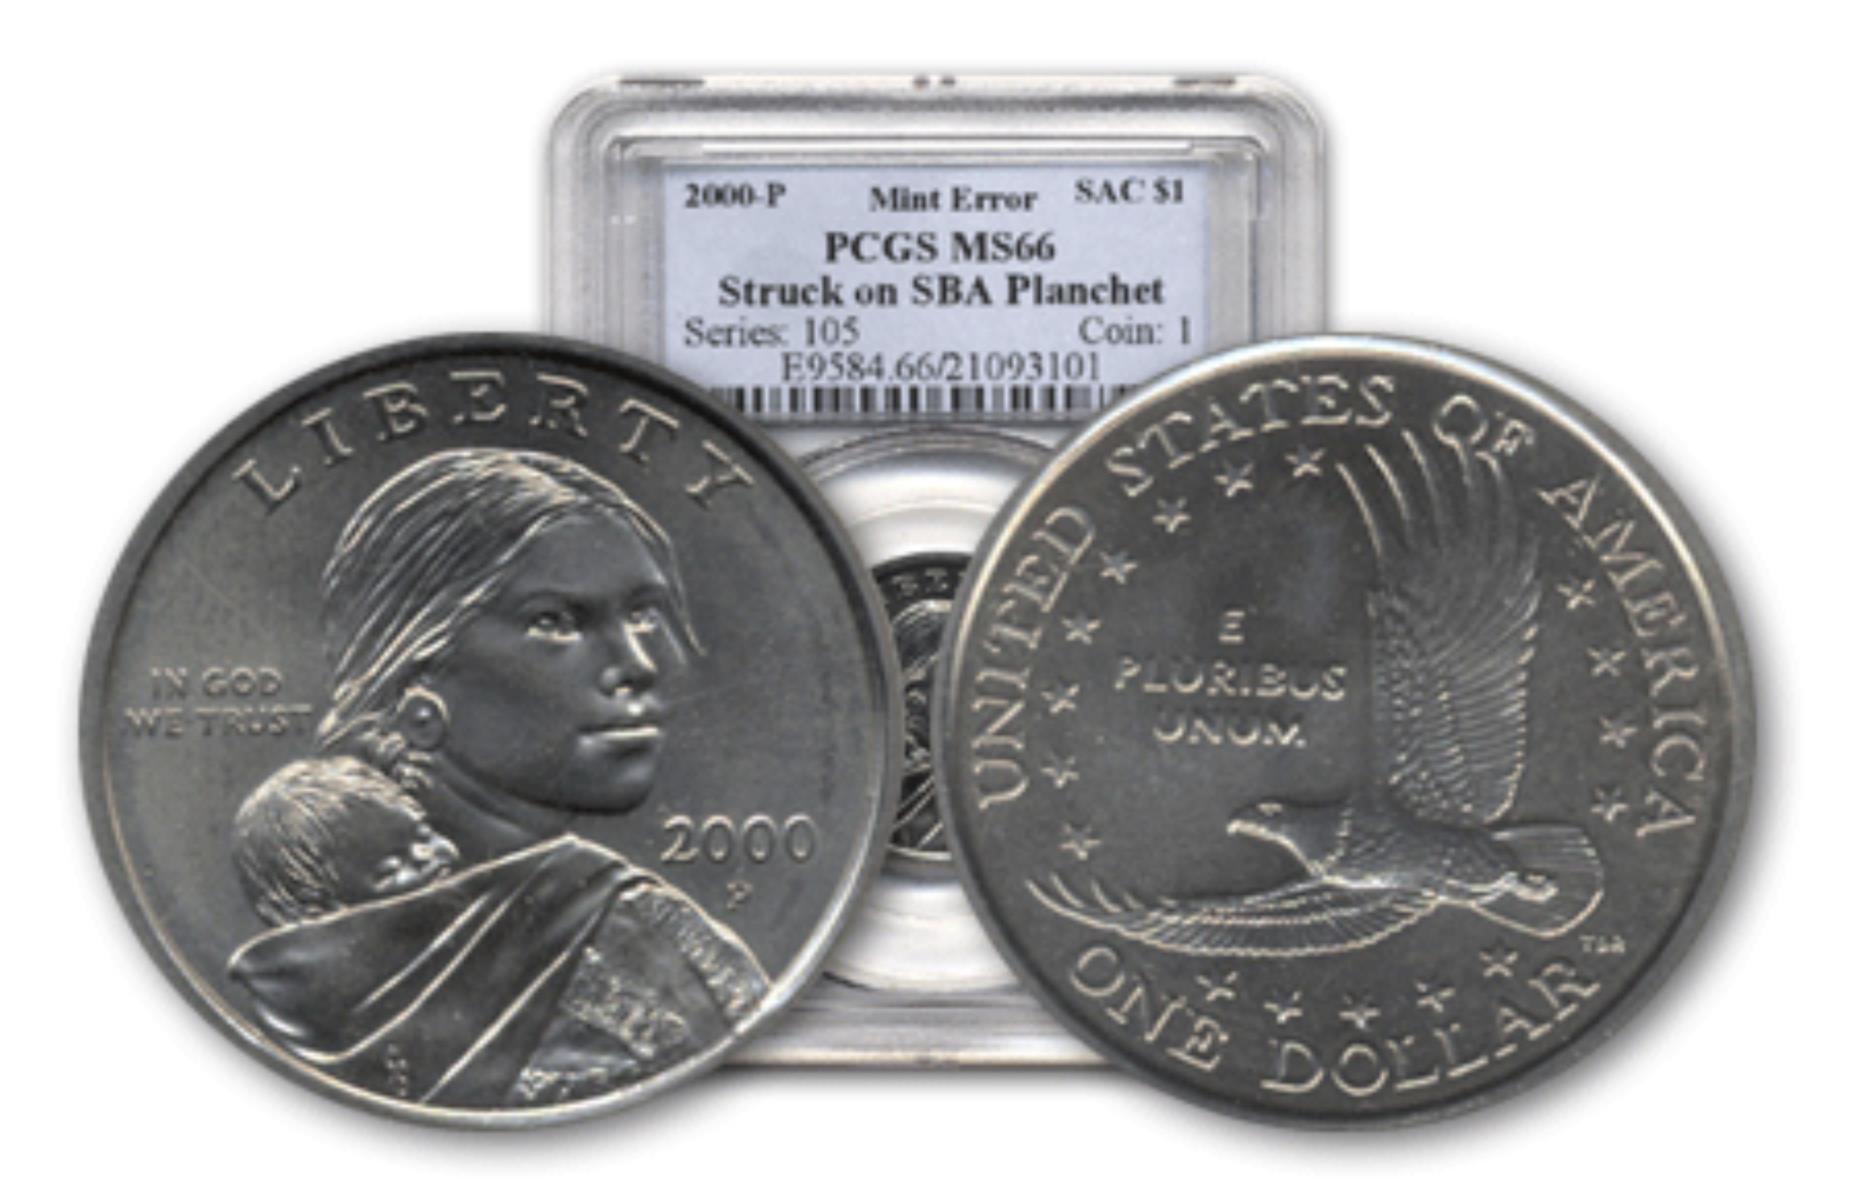 1999/2000 US Sacagawea Dollars with transitional errors